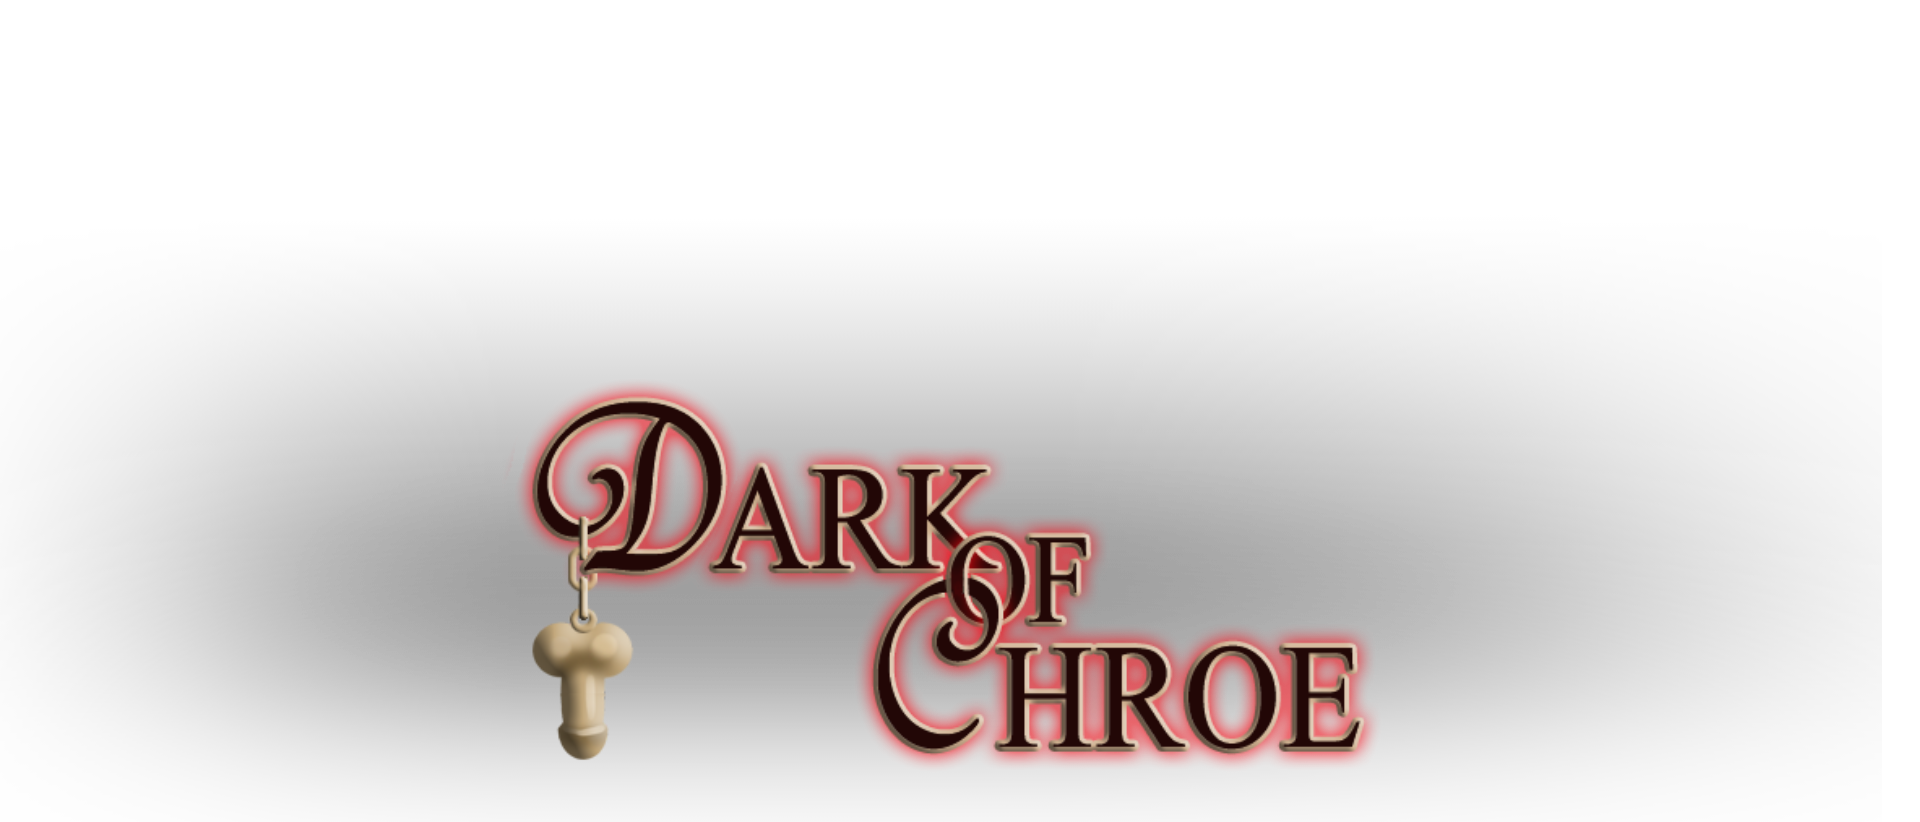 Dark of Chroe (18+)